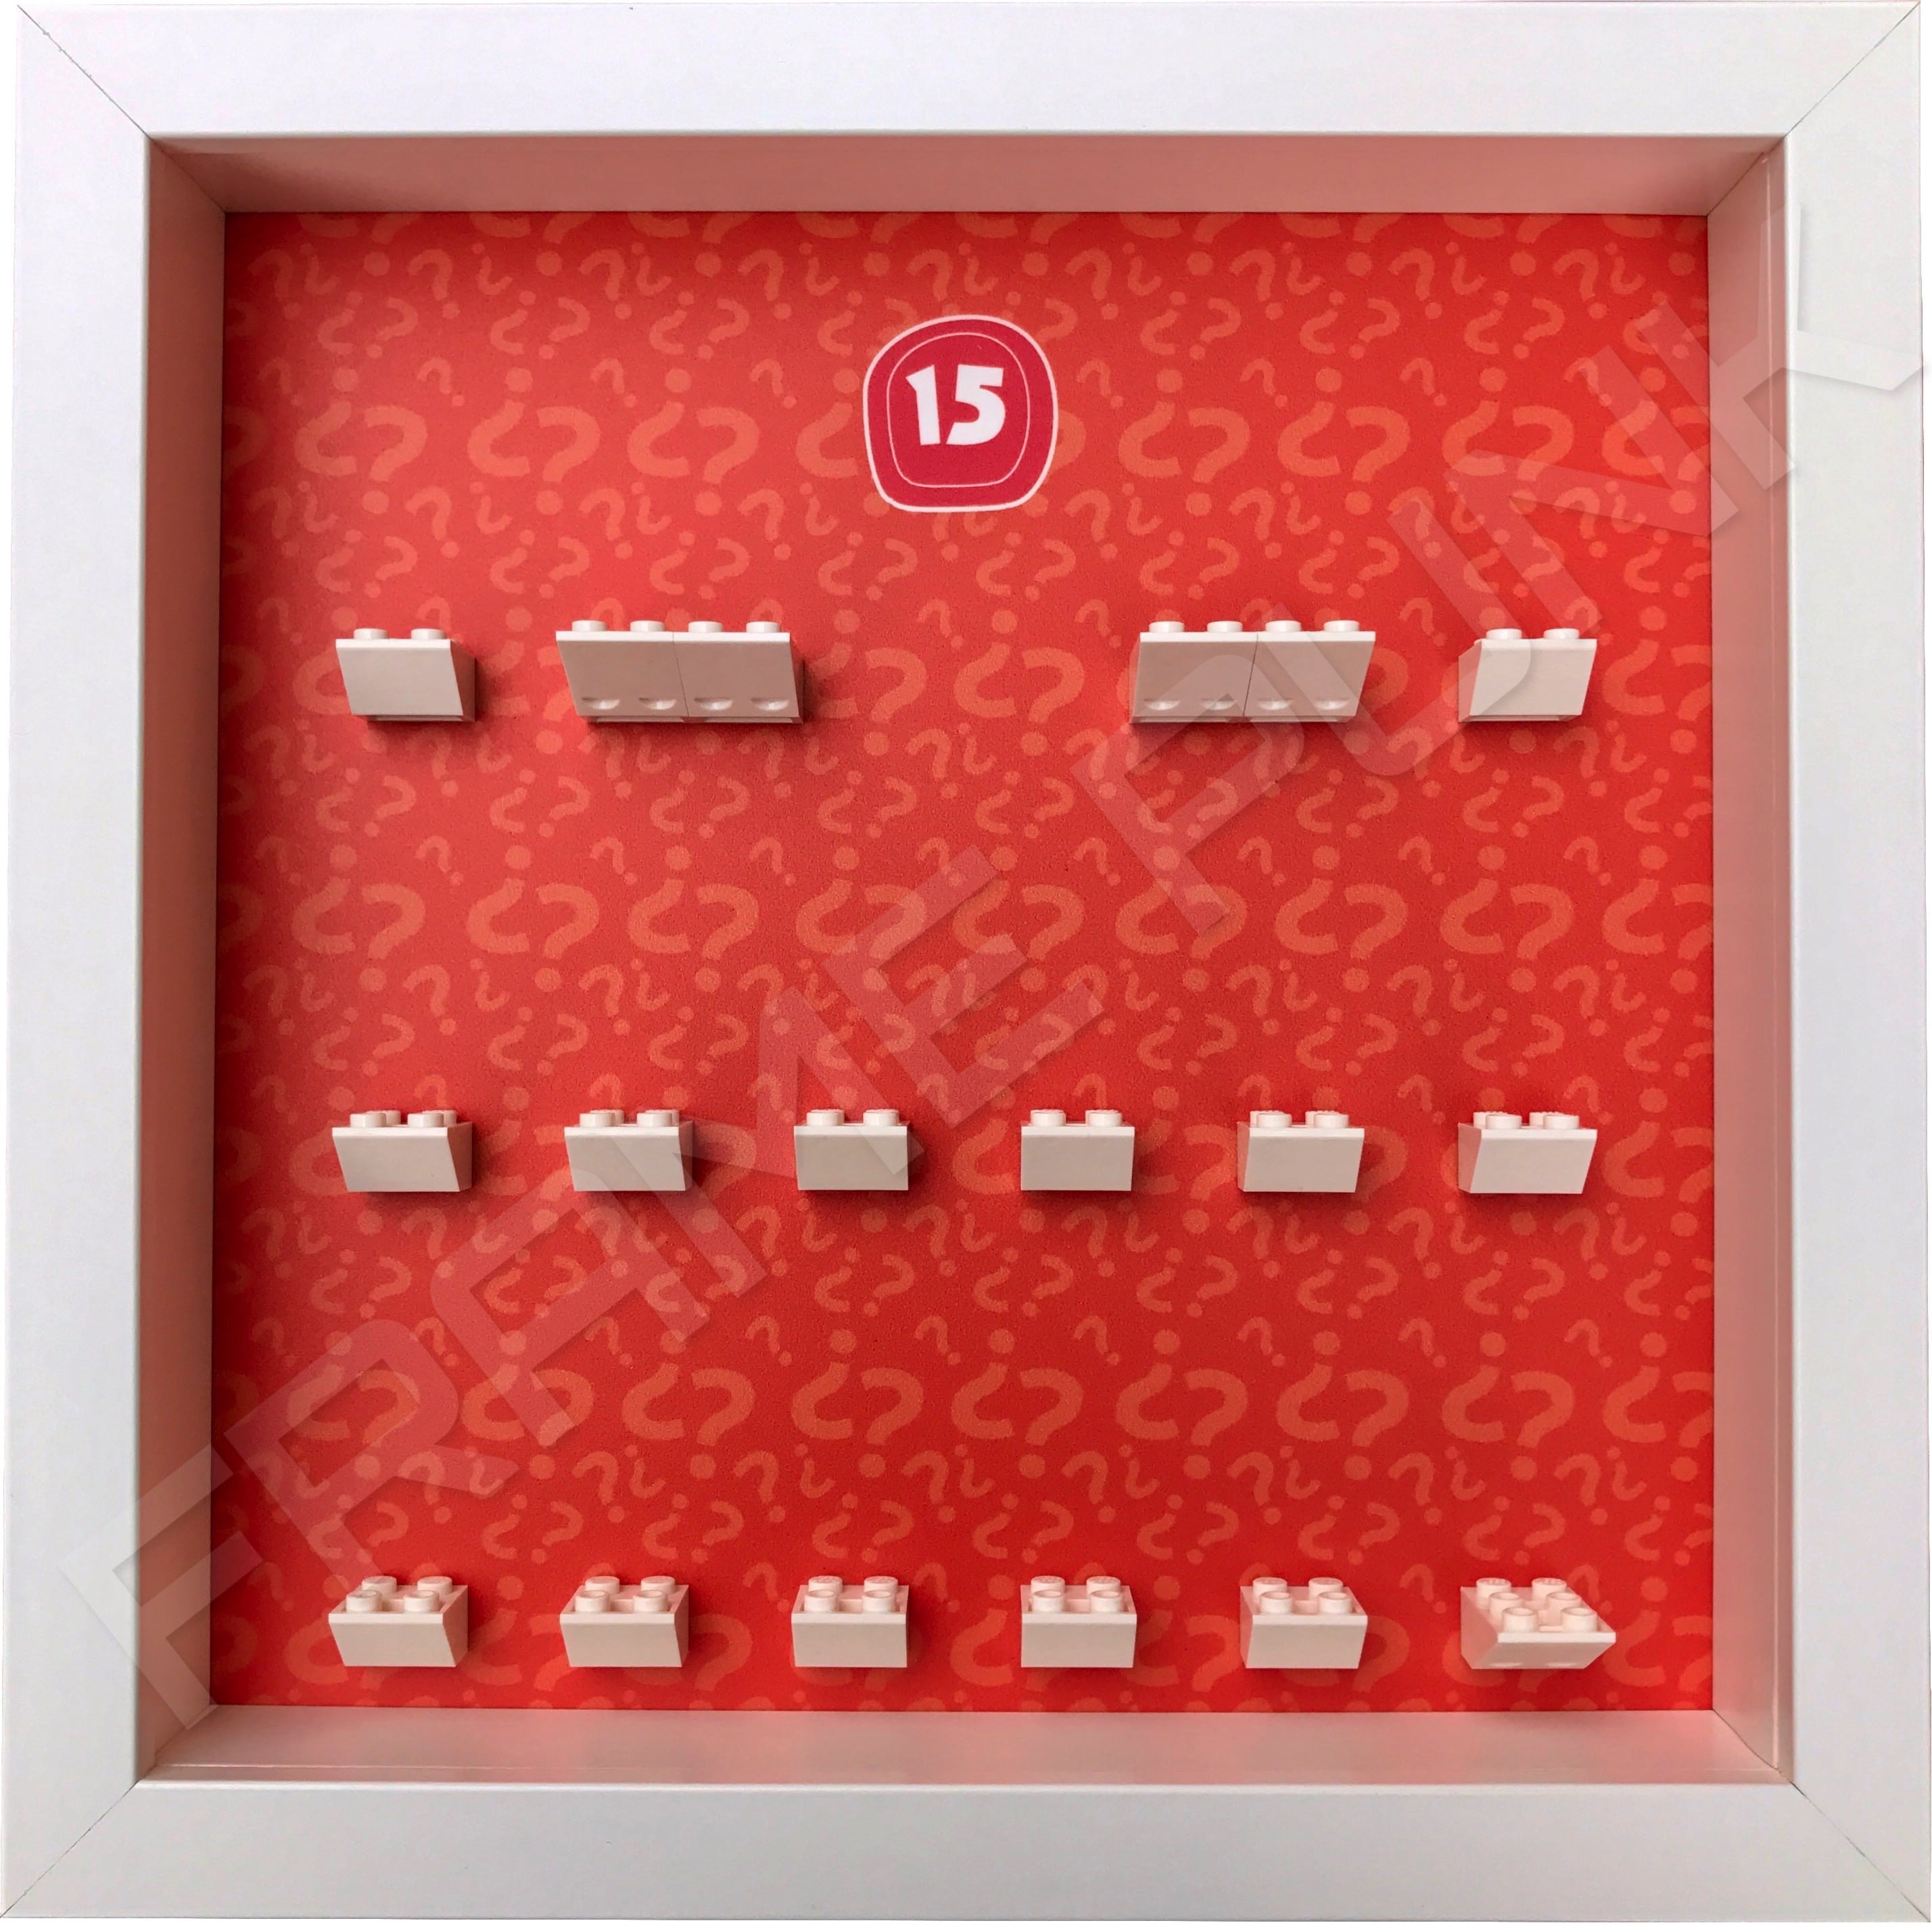 Lego minifigures series 15 display frame